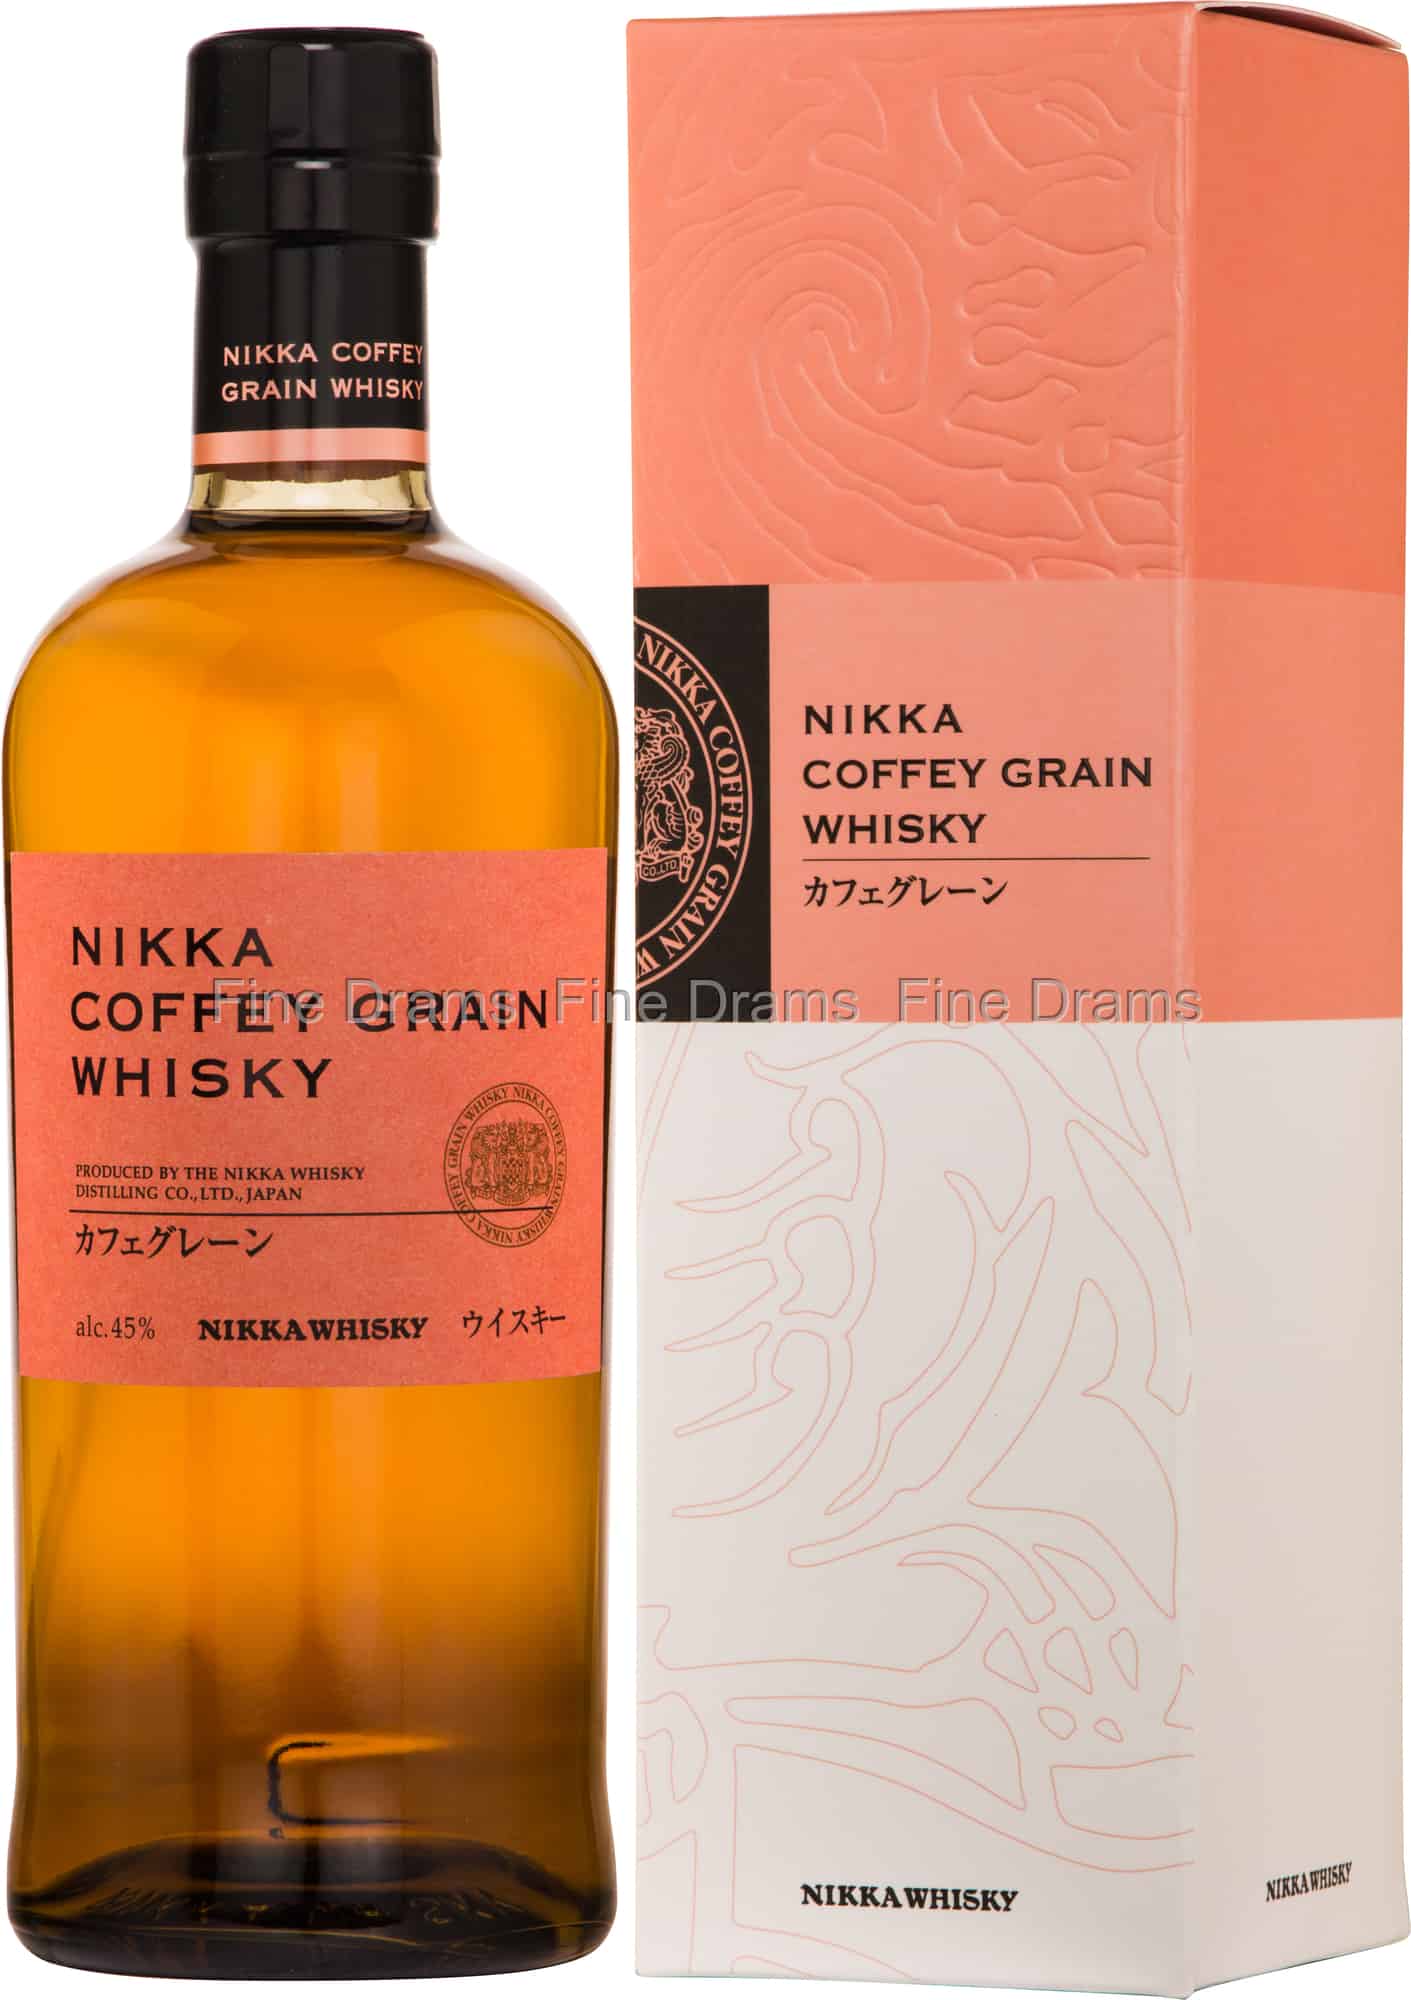 Nikka Coffey Grain Japanese Grain Whisky